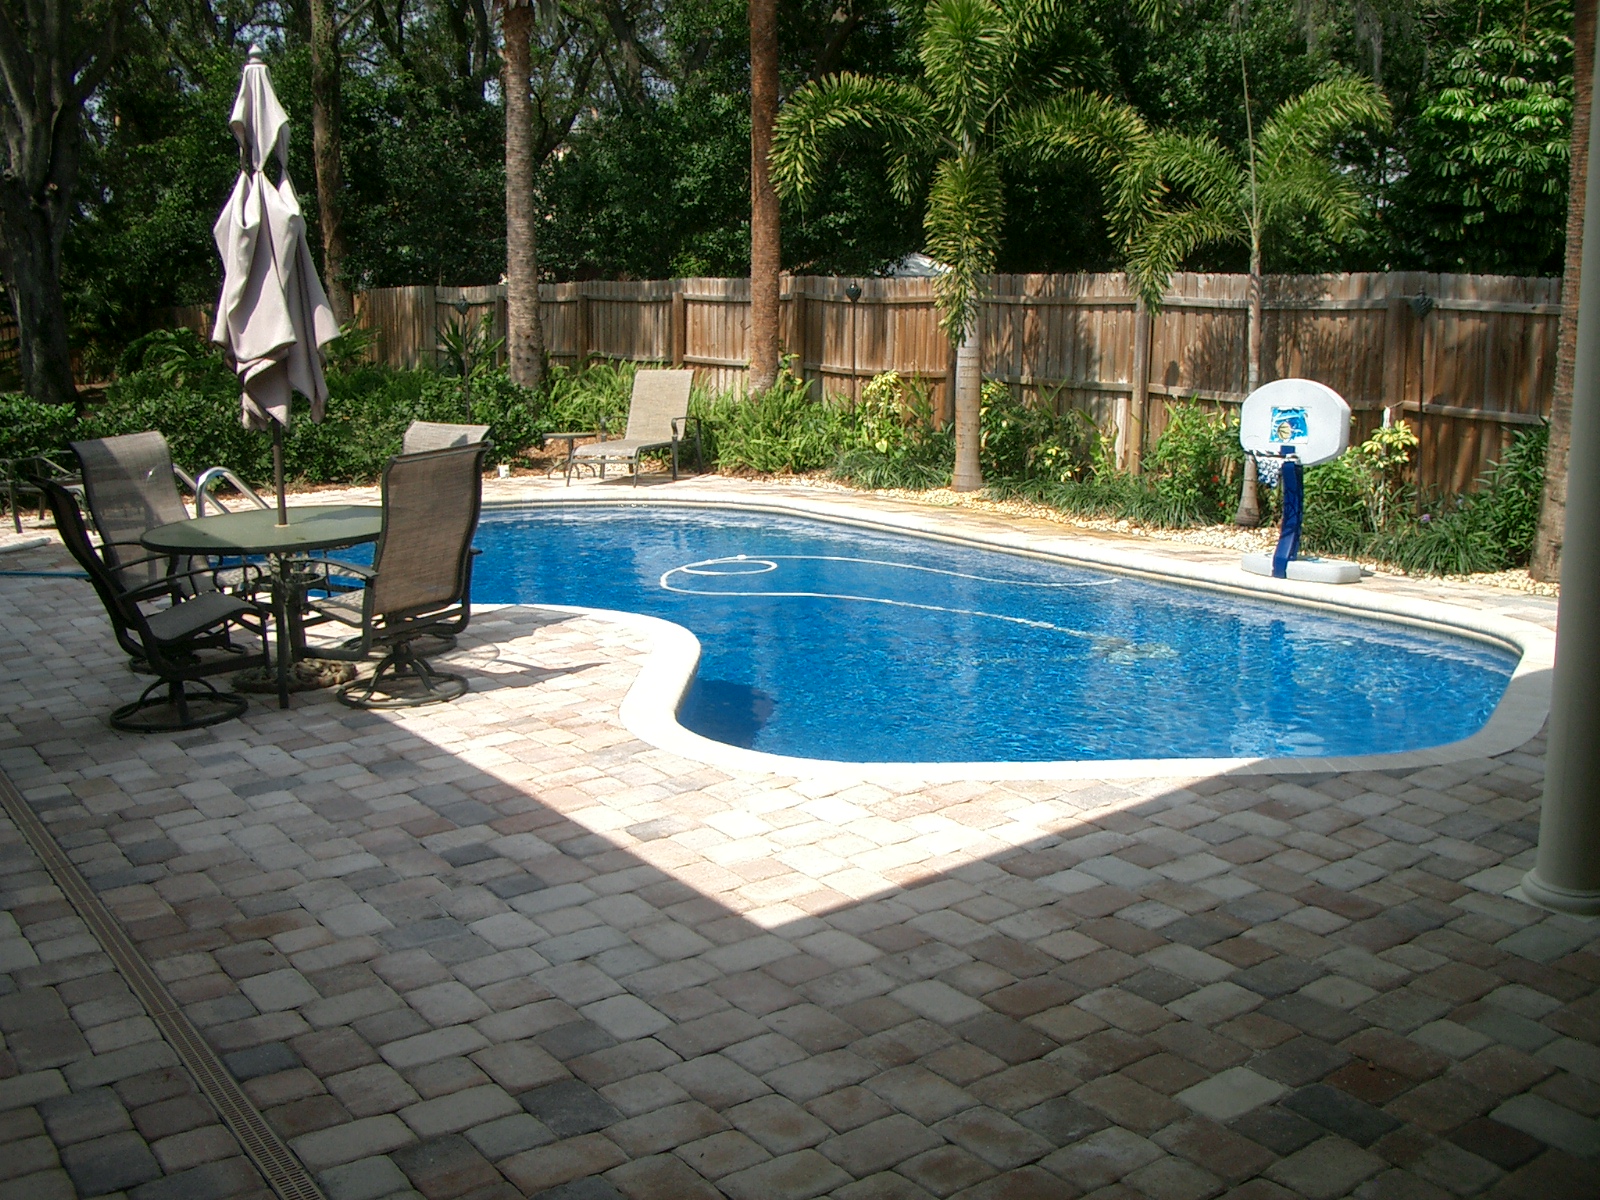 backyard with pool design ideas photo - 2